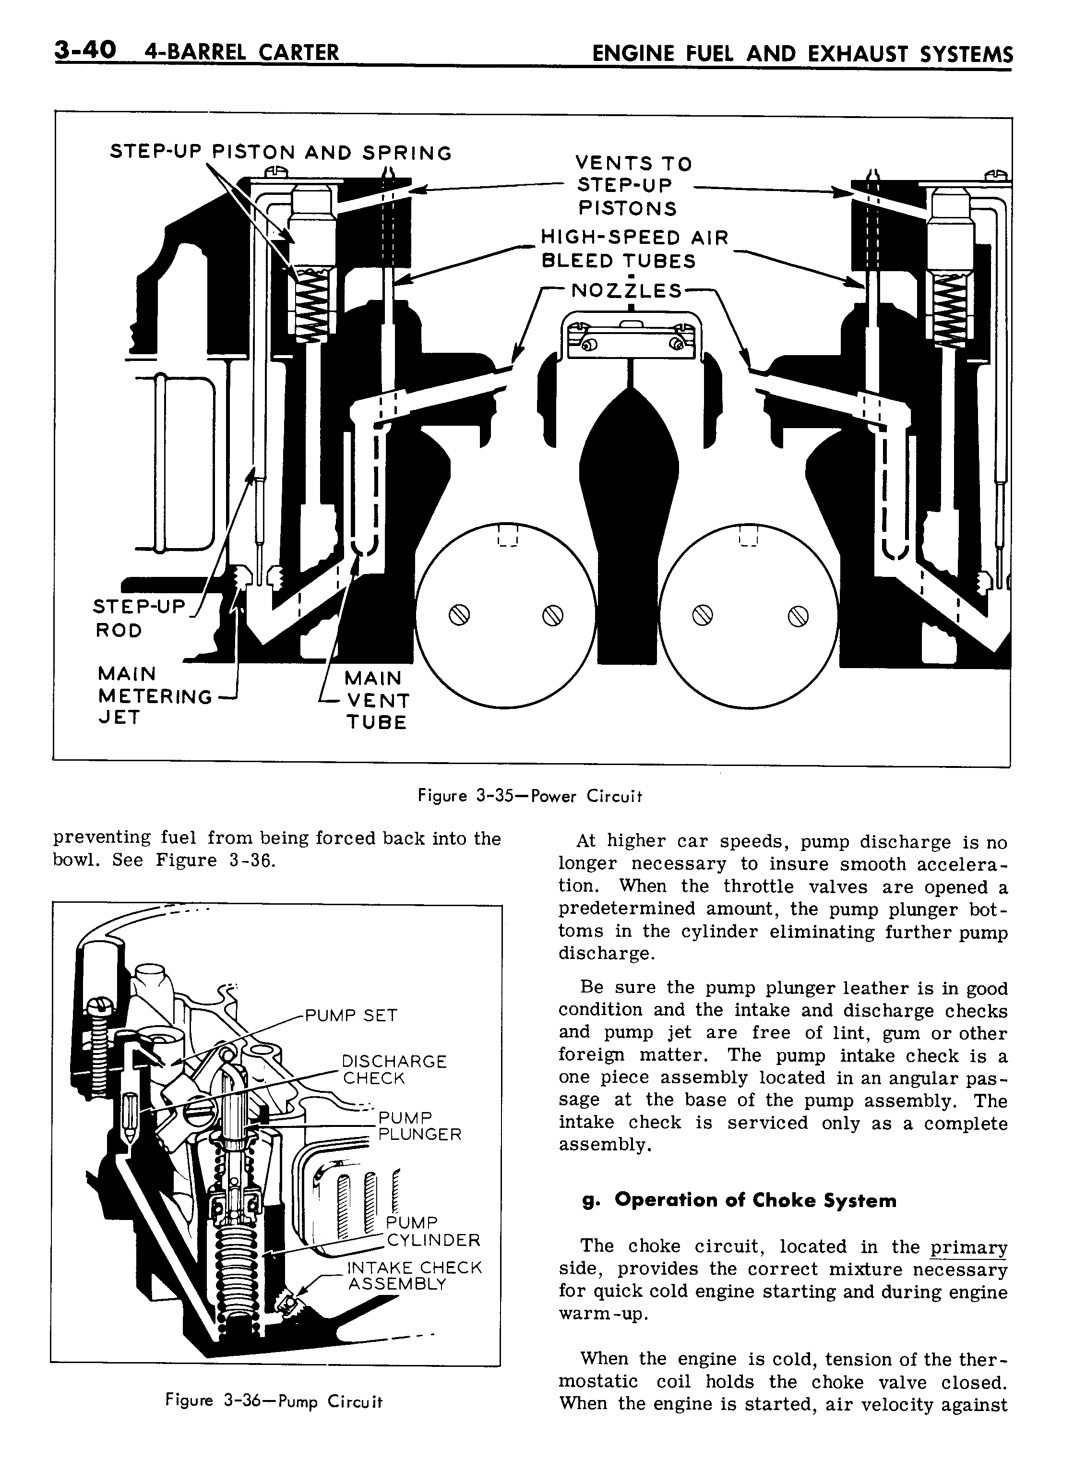 n_04 1961 Buick Shop Manual - Engine Fuel & Exhaust-040-040.jpg